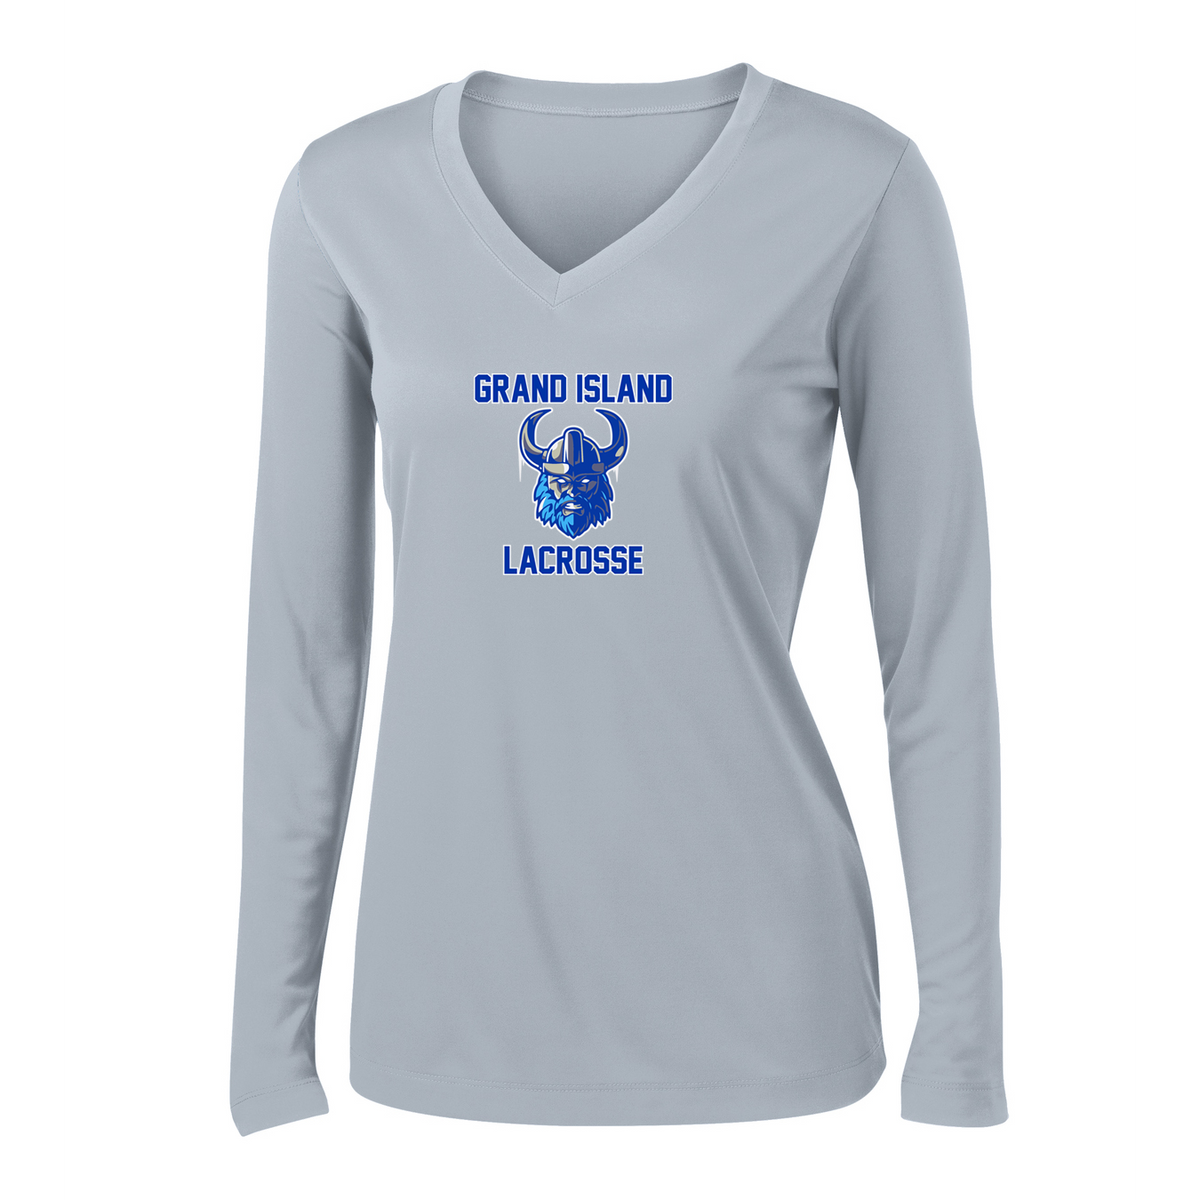 Grand Island Lacrosse Women's Long Sleeve Performance Shirt